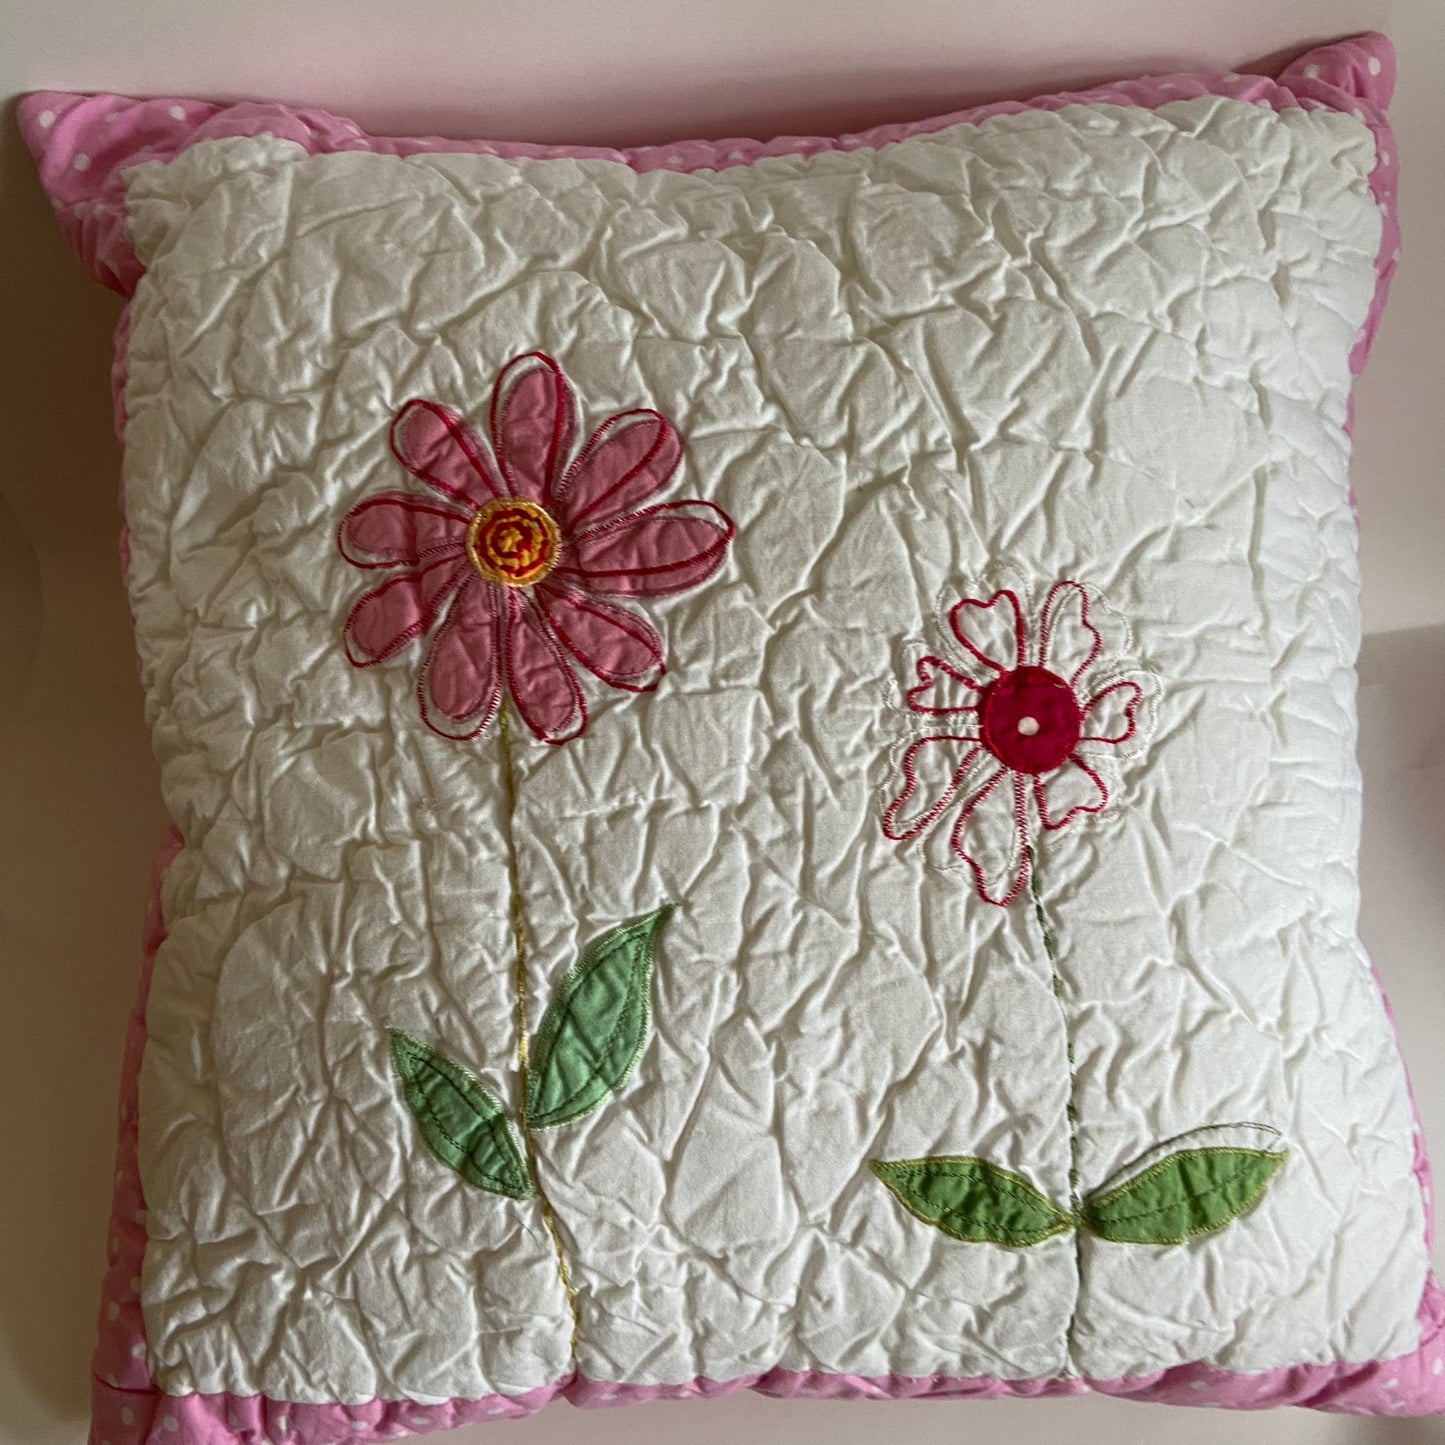 Flower Garden Filled Cushion by Babyface